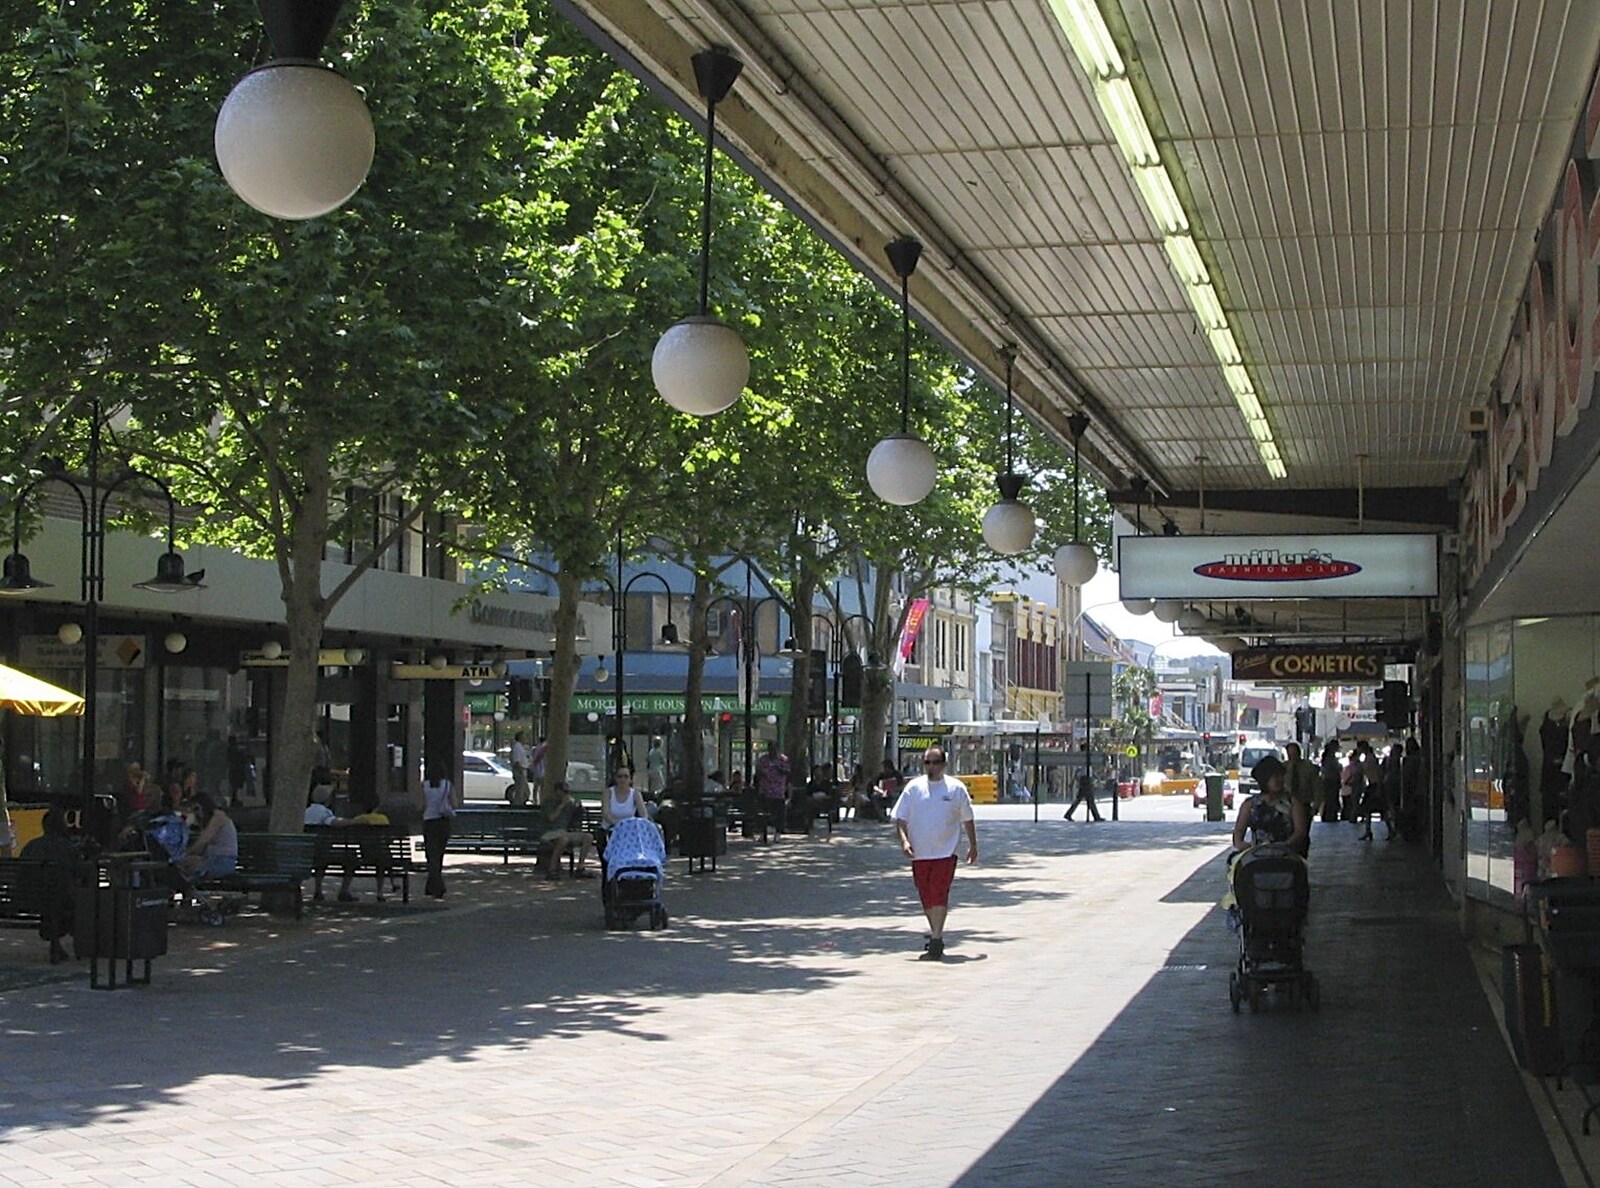 A Parramatta street scene from Sydney, New South Wales, Australia - 10th October 2004